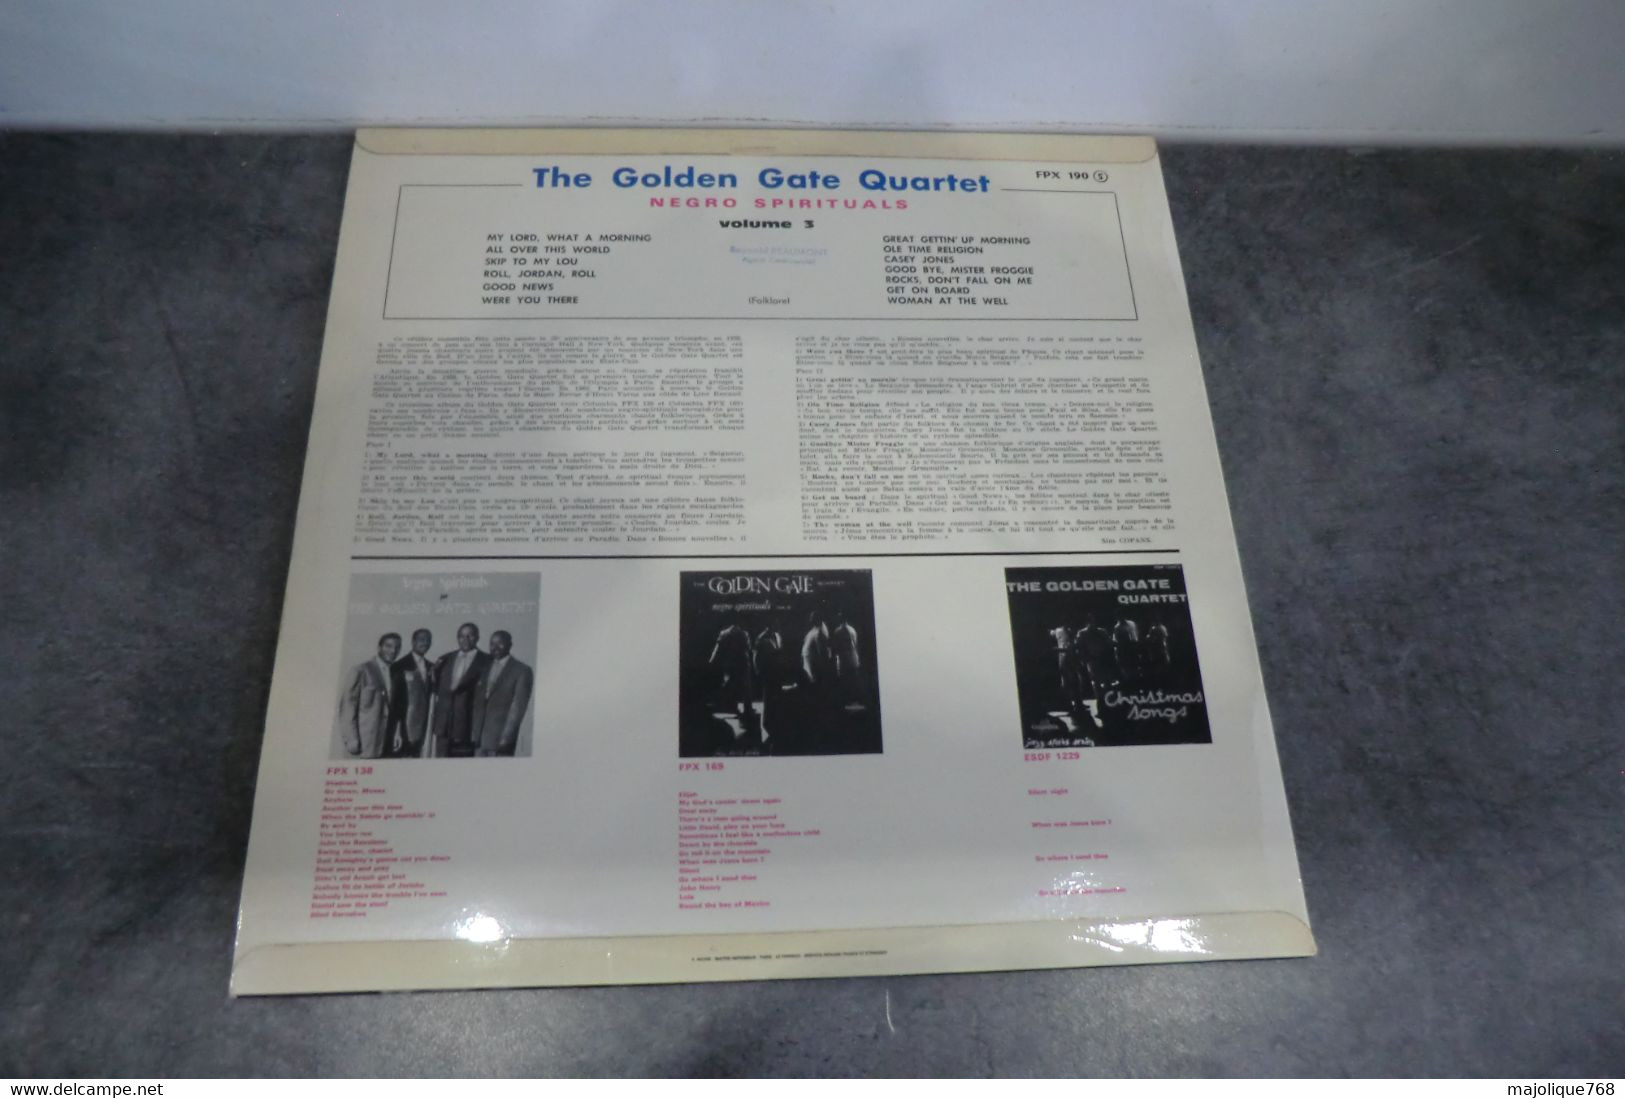 Disque De The Golden Gate Quartet - Négro Spirituals N°3 - Columbia FPX 190 S - France 1960 - Canciones Religiosas Y  Gospels